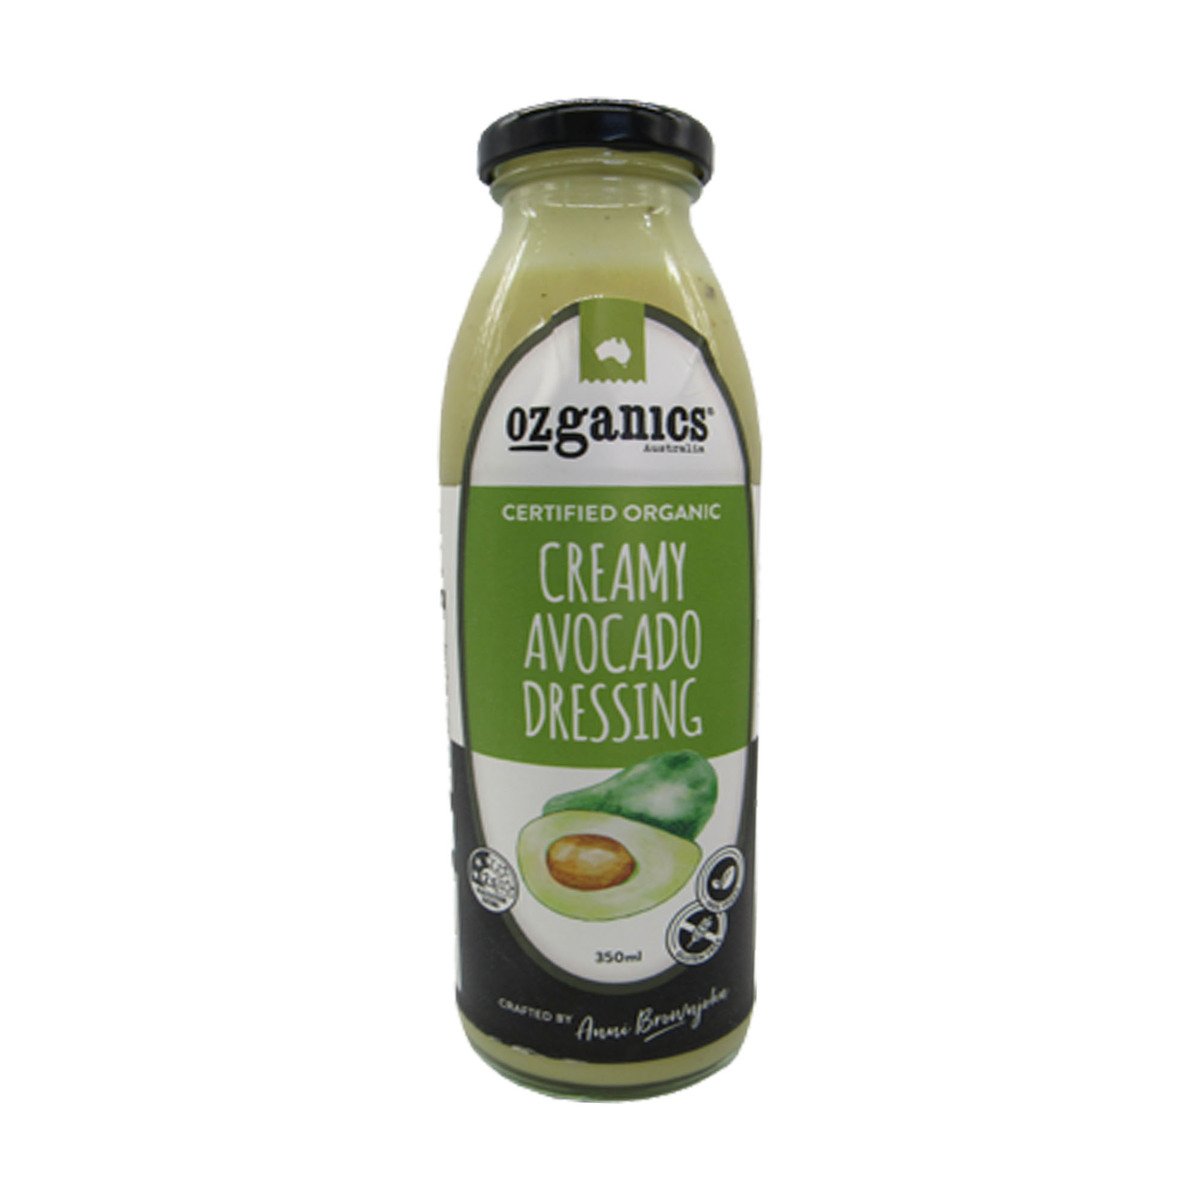 Ozganics Organic Creamy Avocado Dressing 350ml